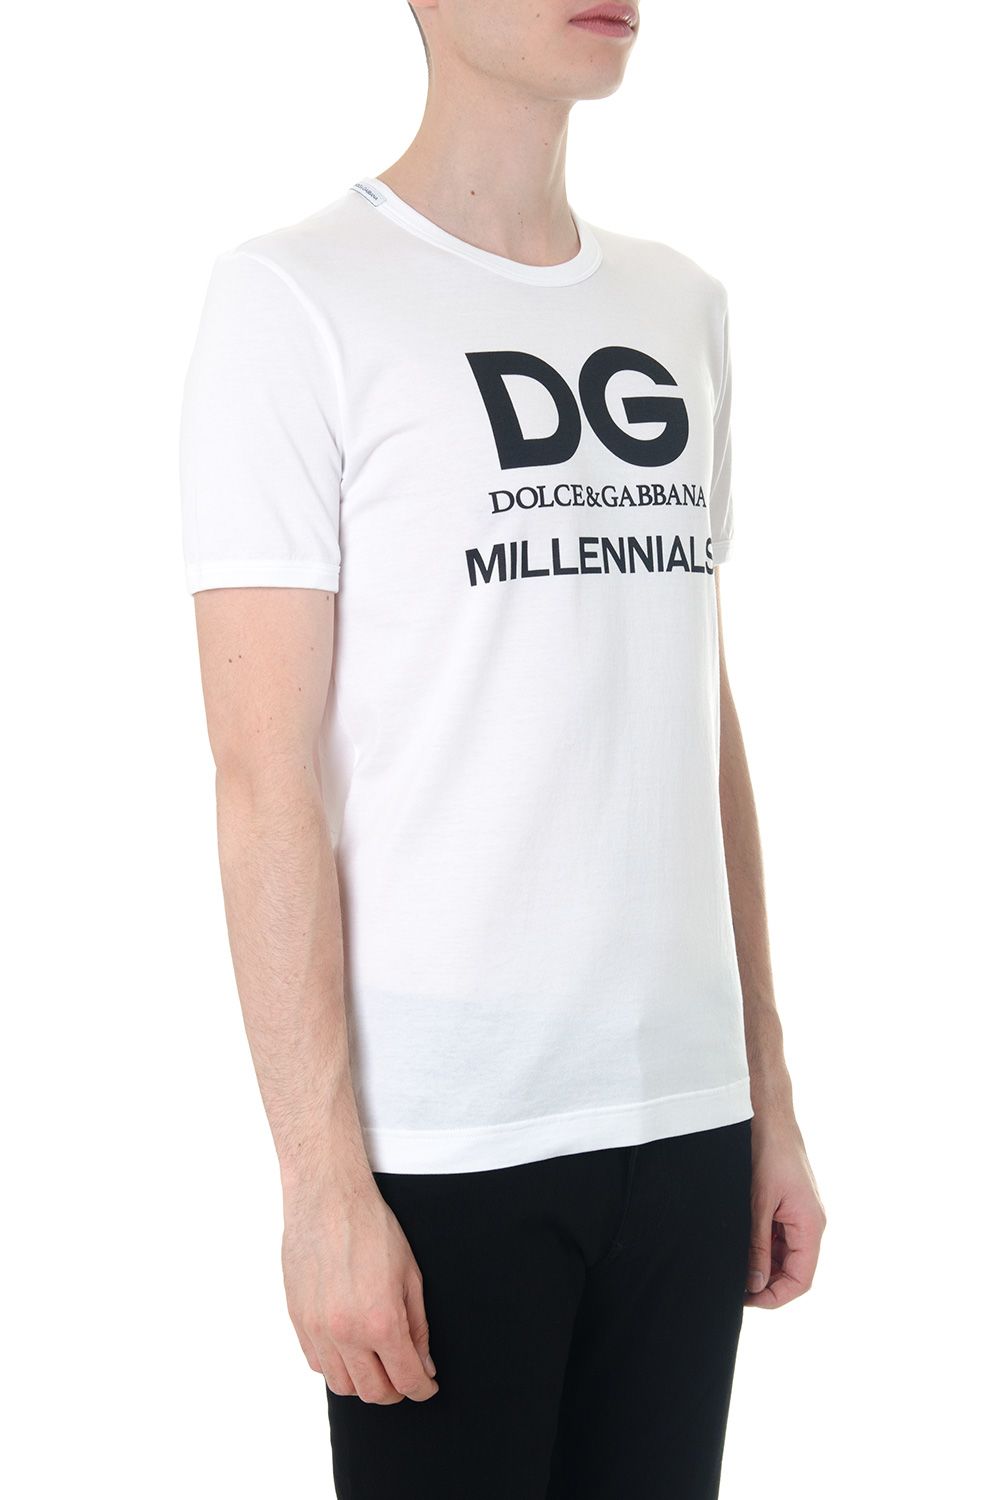 Dolce & Gabbana Dolce & Gabbana White Cotton T-shirt Dg Millenials ...